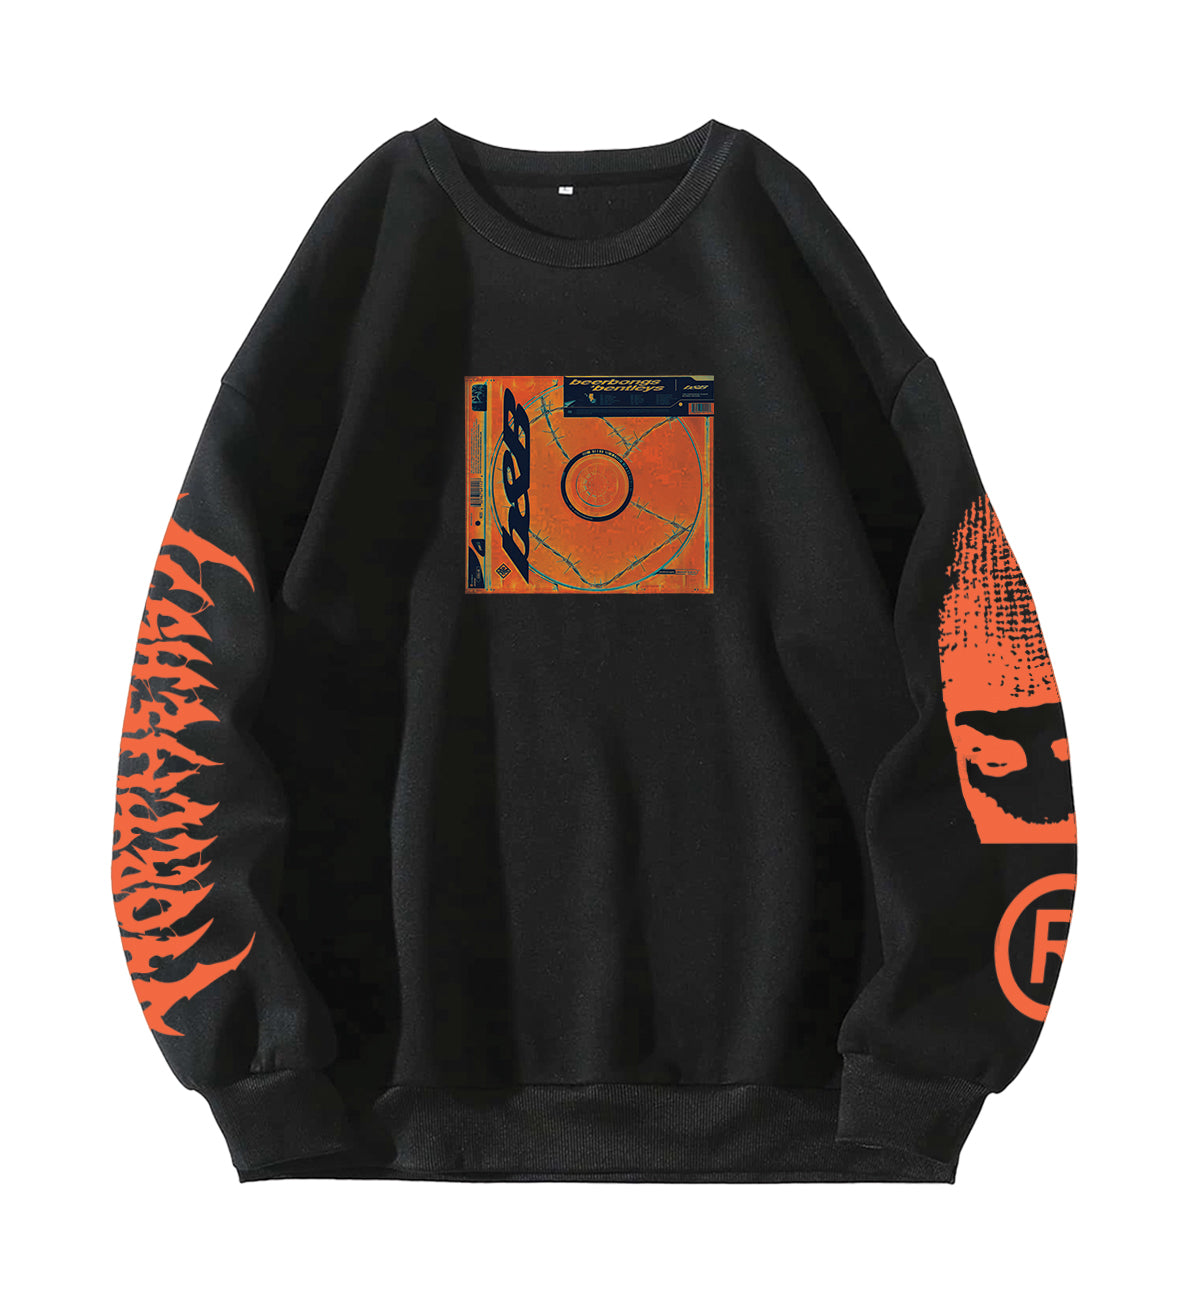 Post Malone Designed Oversized Sweatshirt